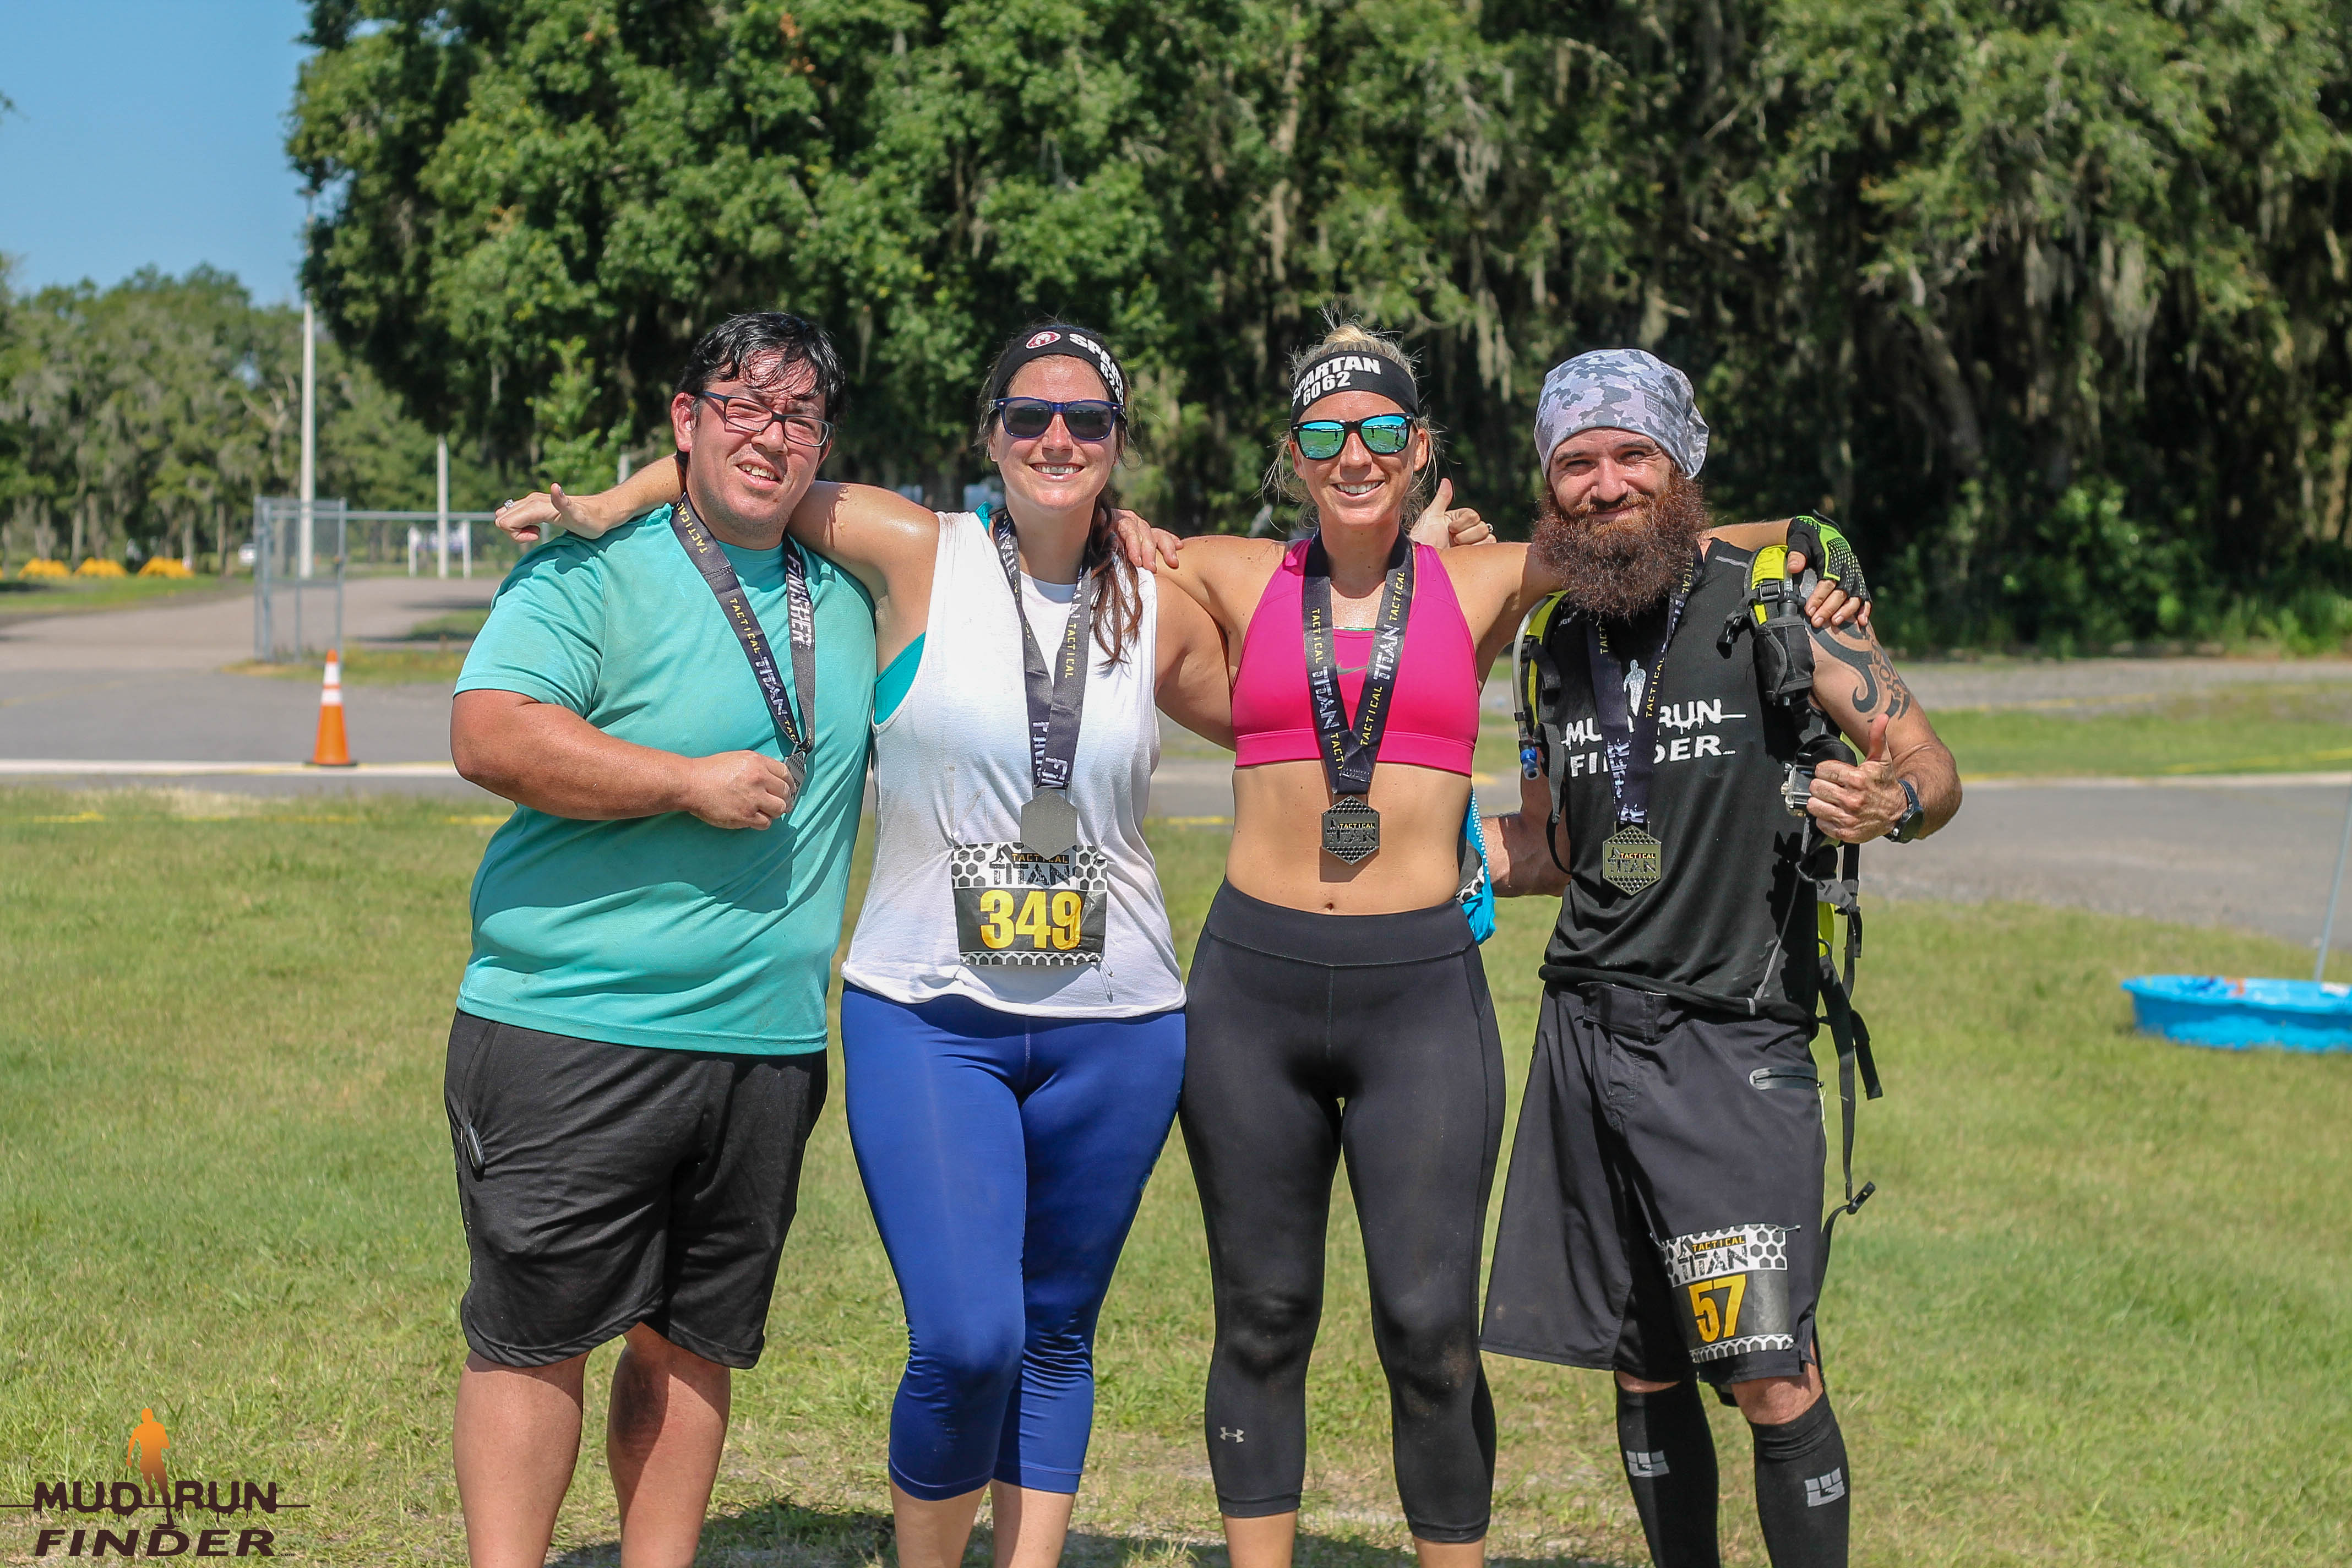 Titan Runs presents: Tactical Titan 3 - June 9th, 2018 in Dover, FL | Photo Credit: Mud Run Finder